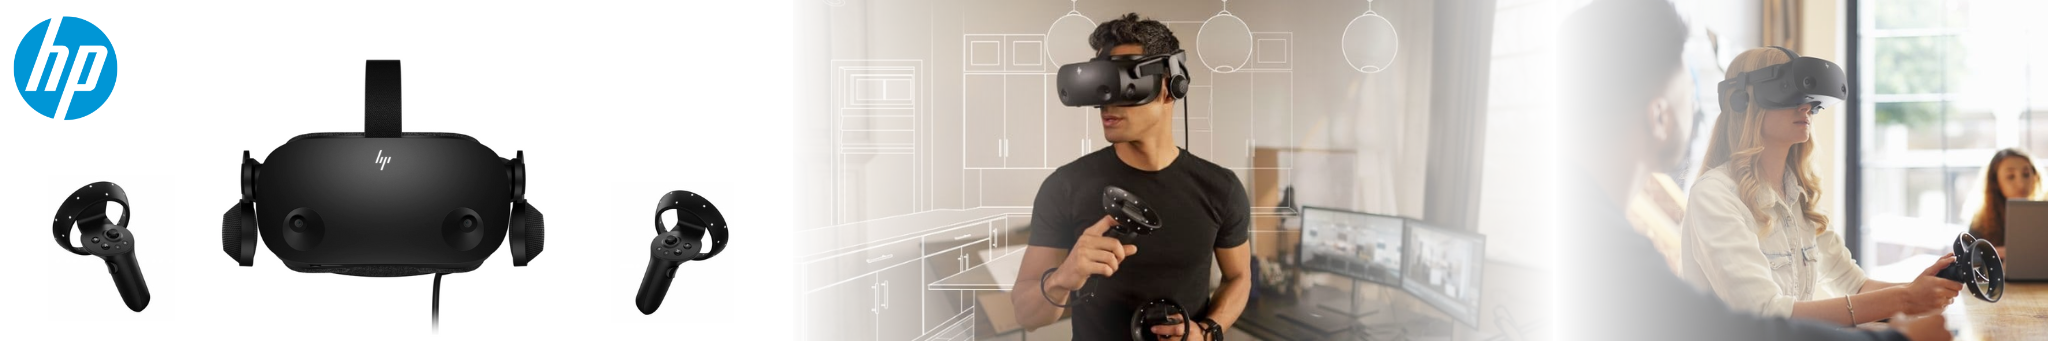 HP Virtual reality headsets